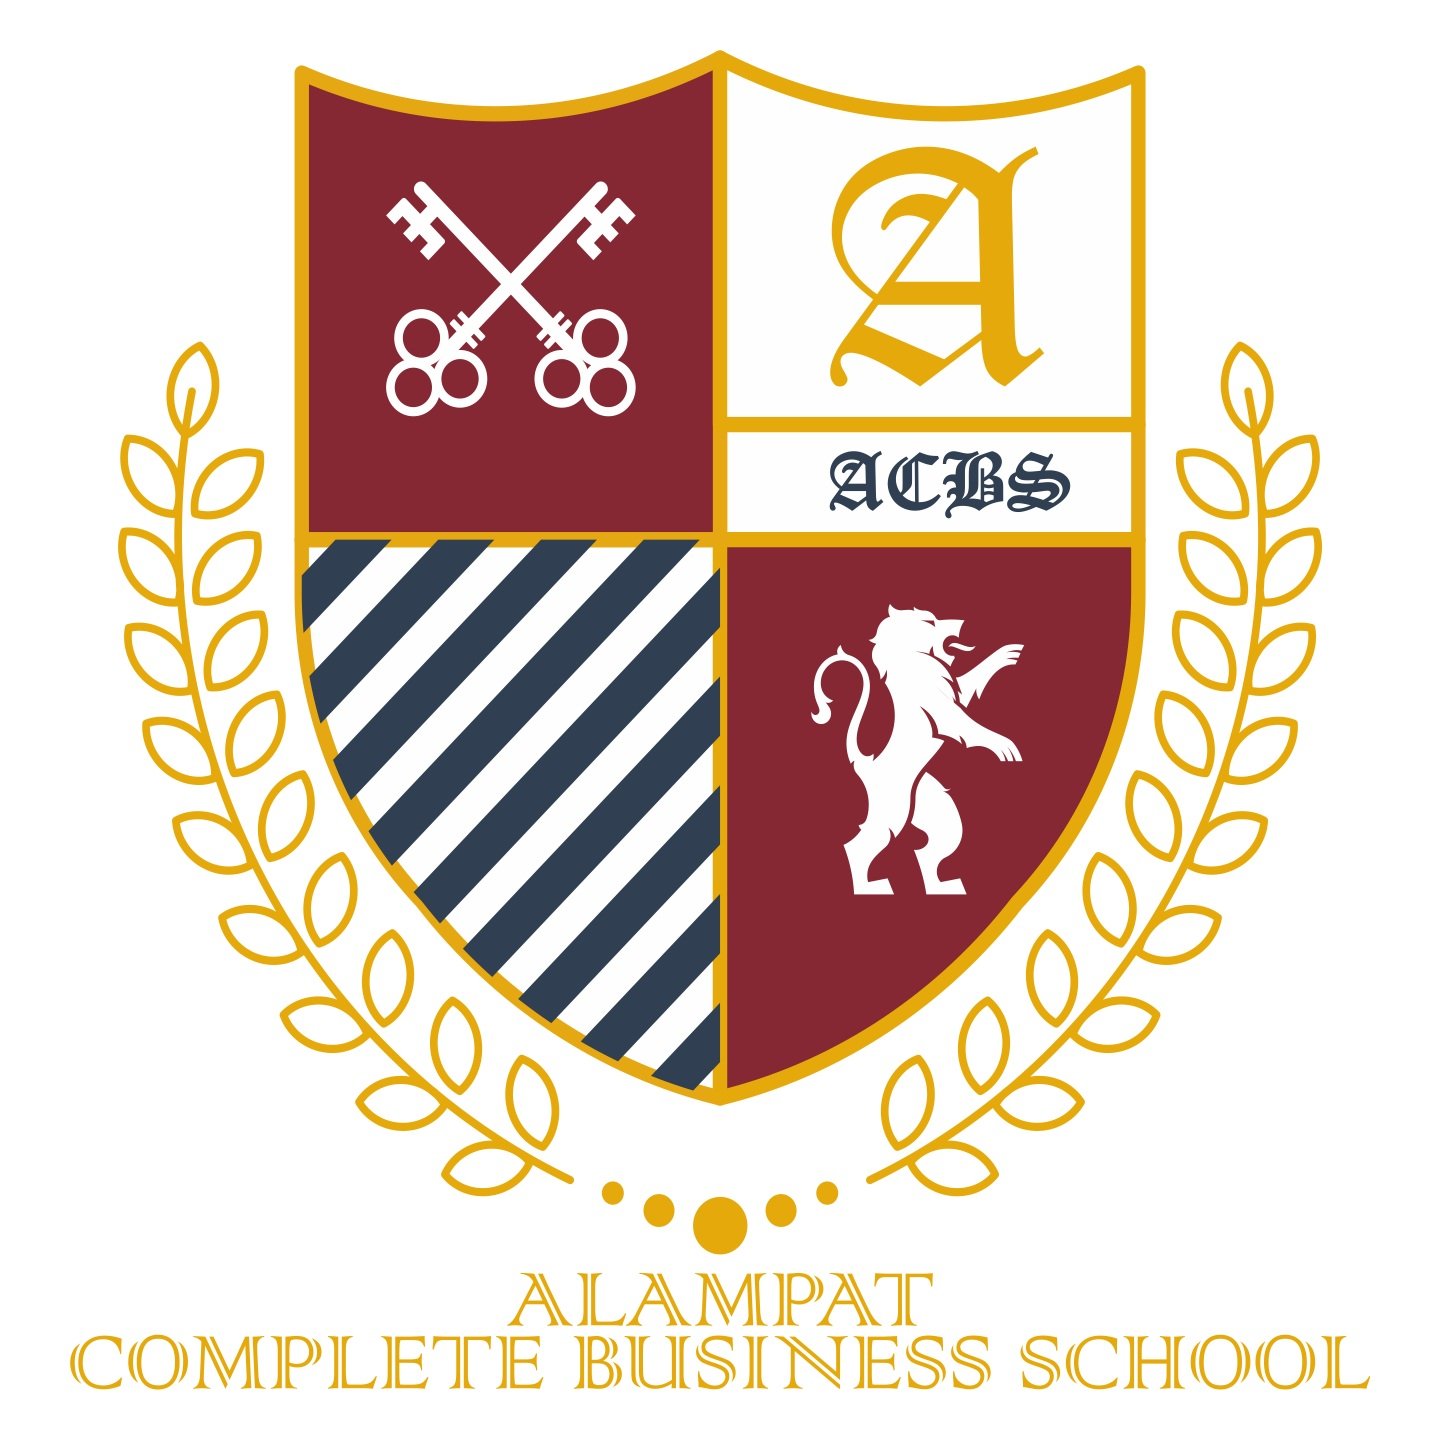 Alampat Complete Business School